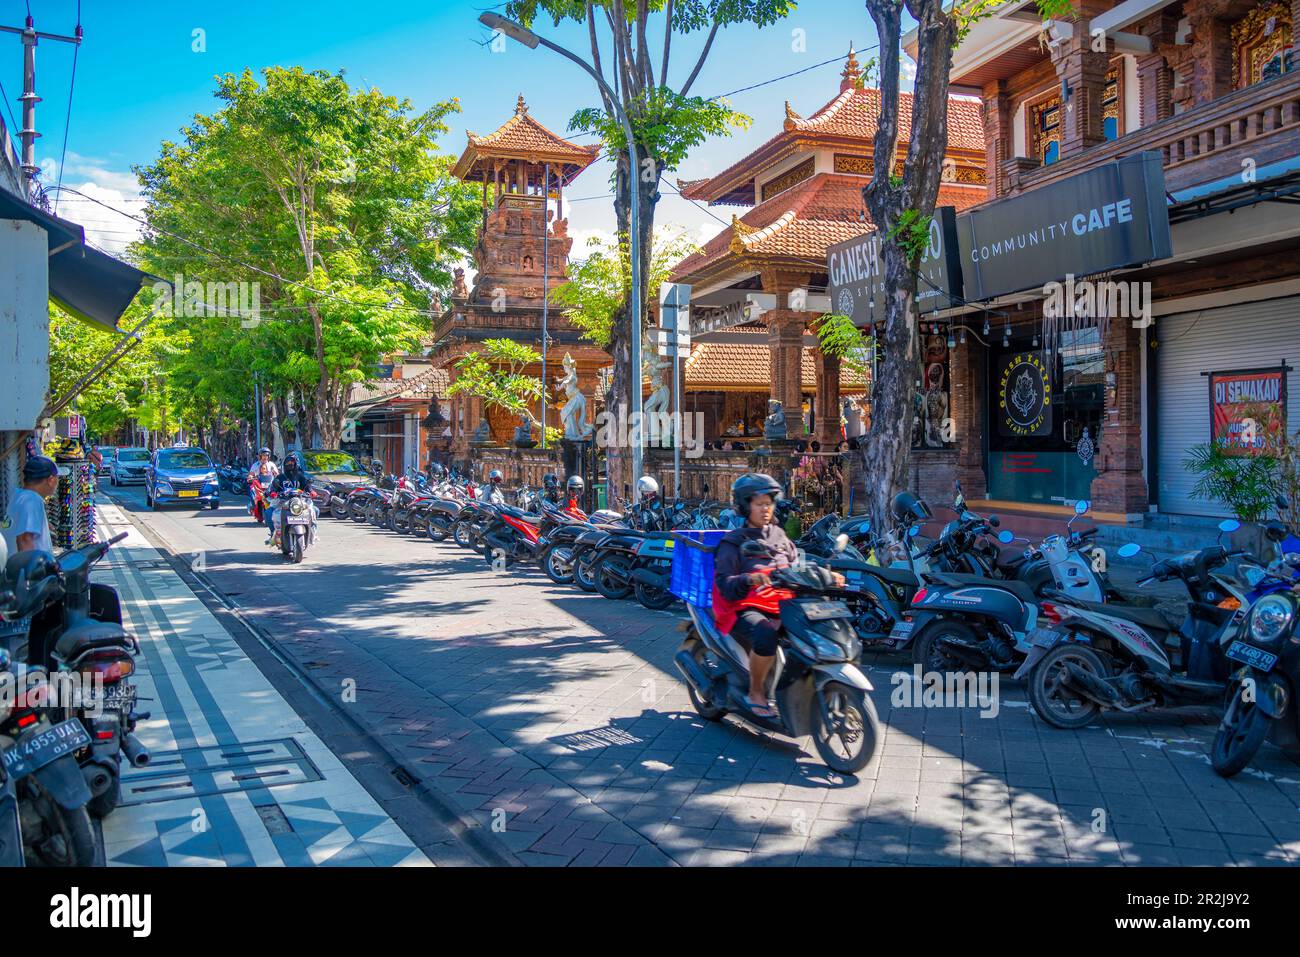 View of Hindu Temple and street in Kuta, Kuta, Bali, Indonesia, South East Asia, Asia Stock Photo